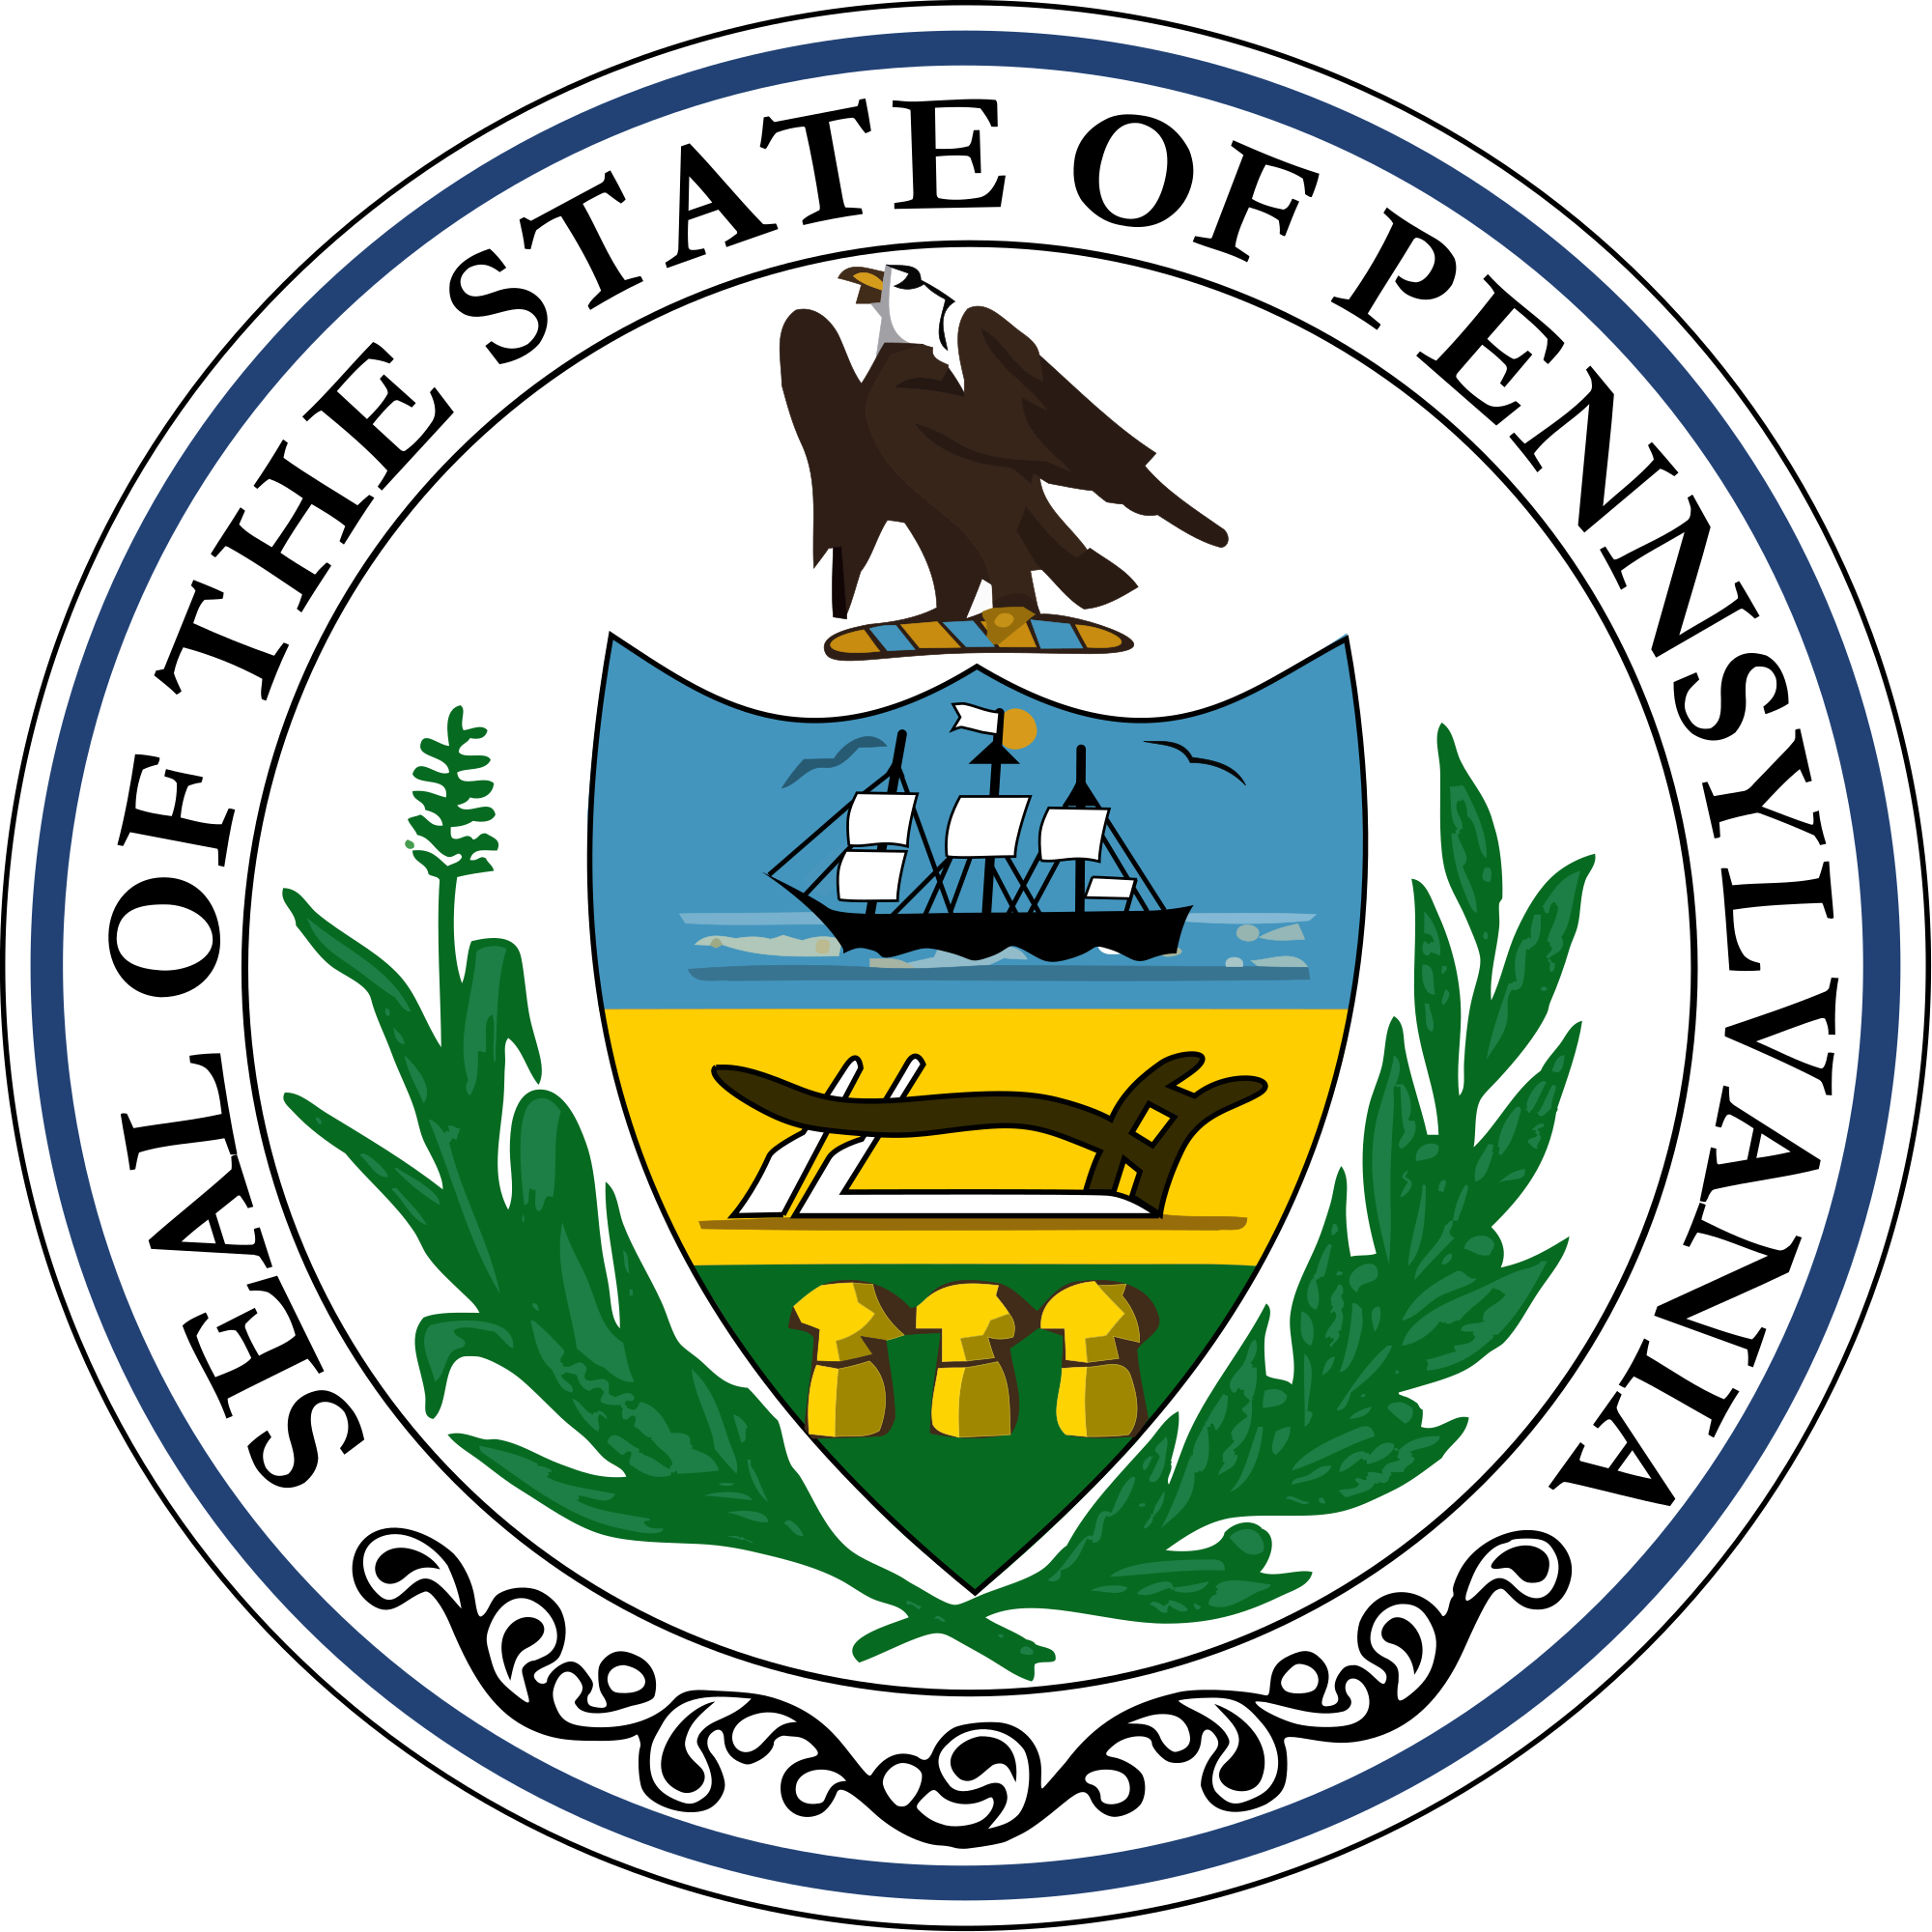 The Pennsylvania state seal.